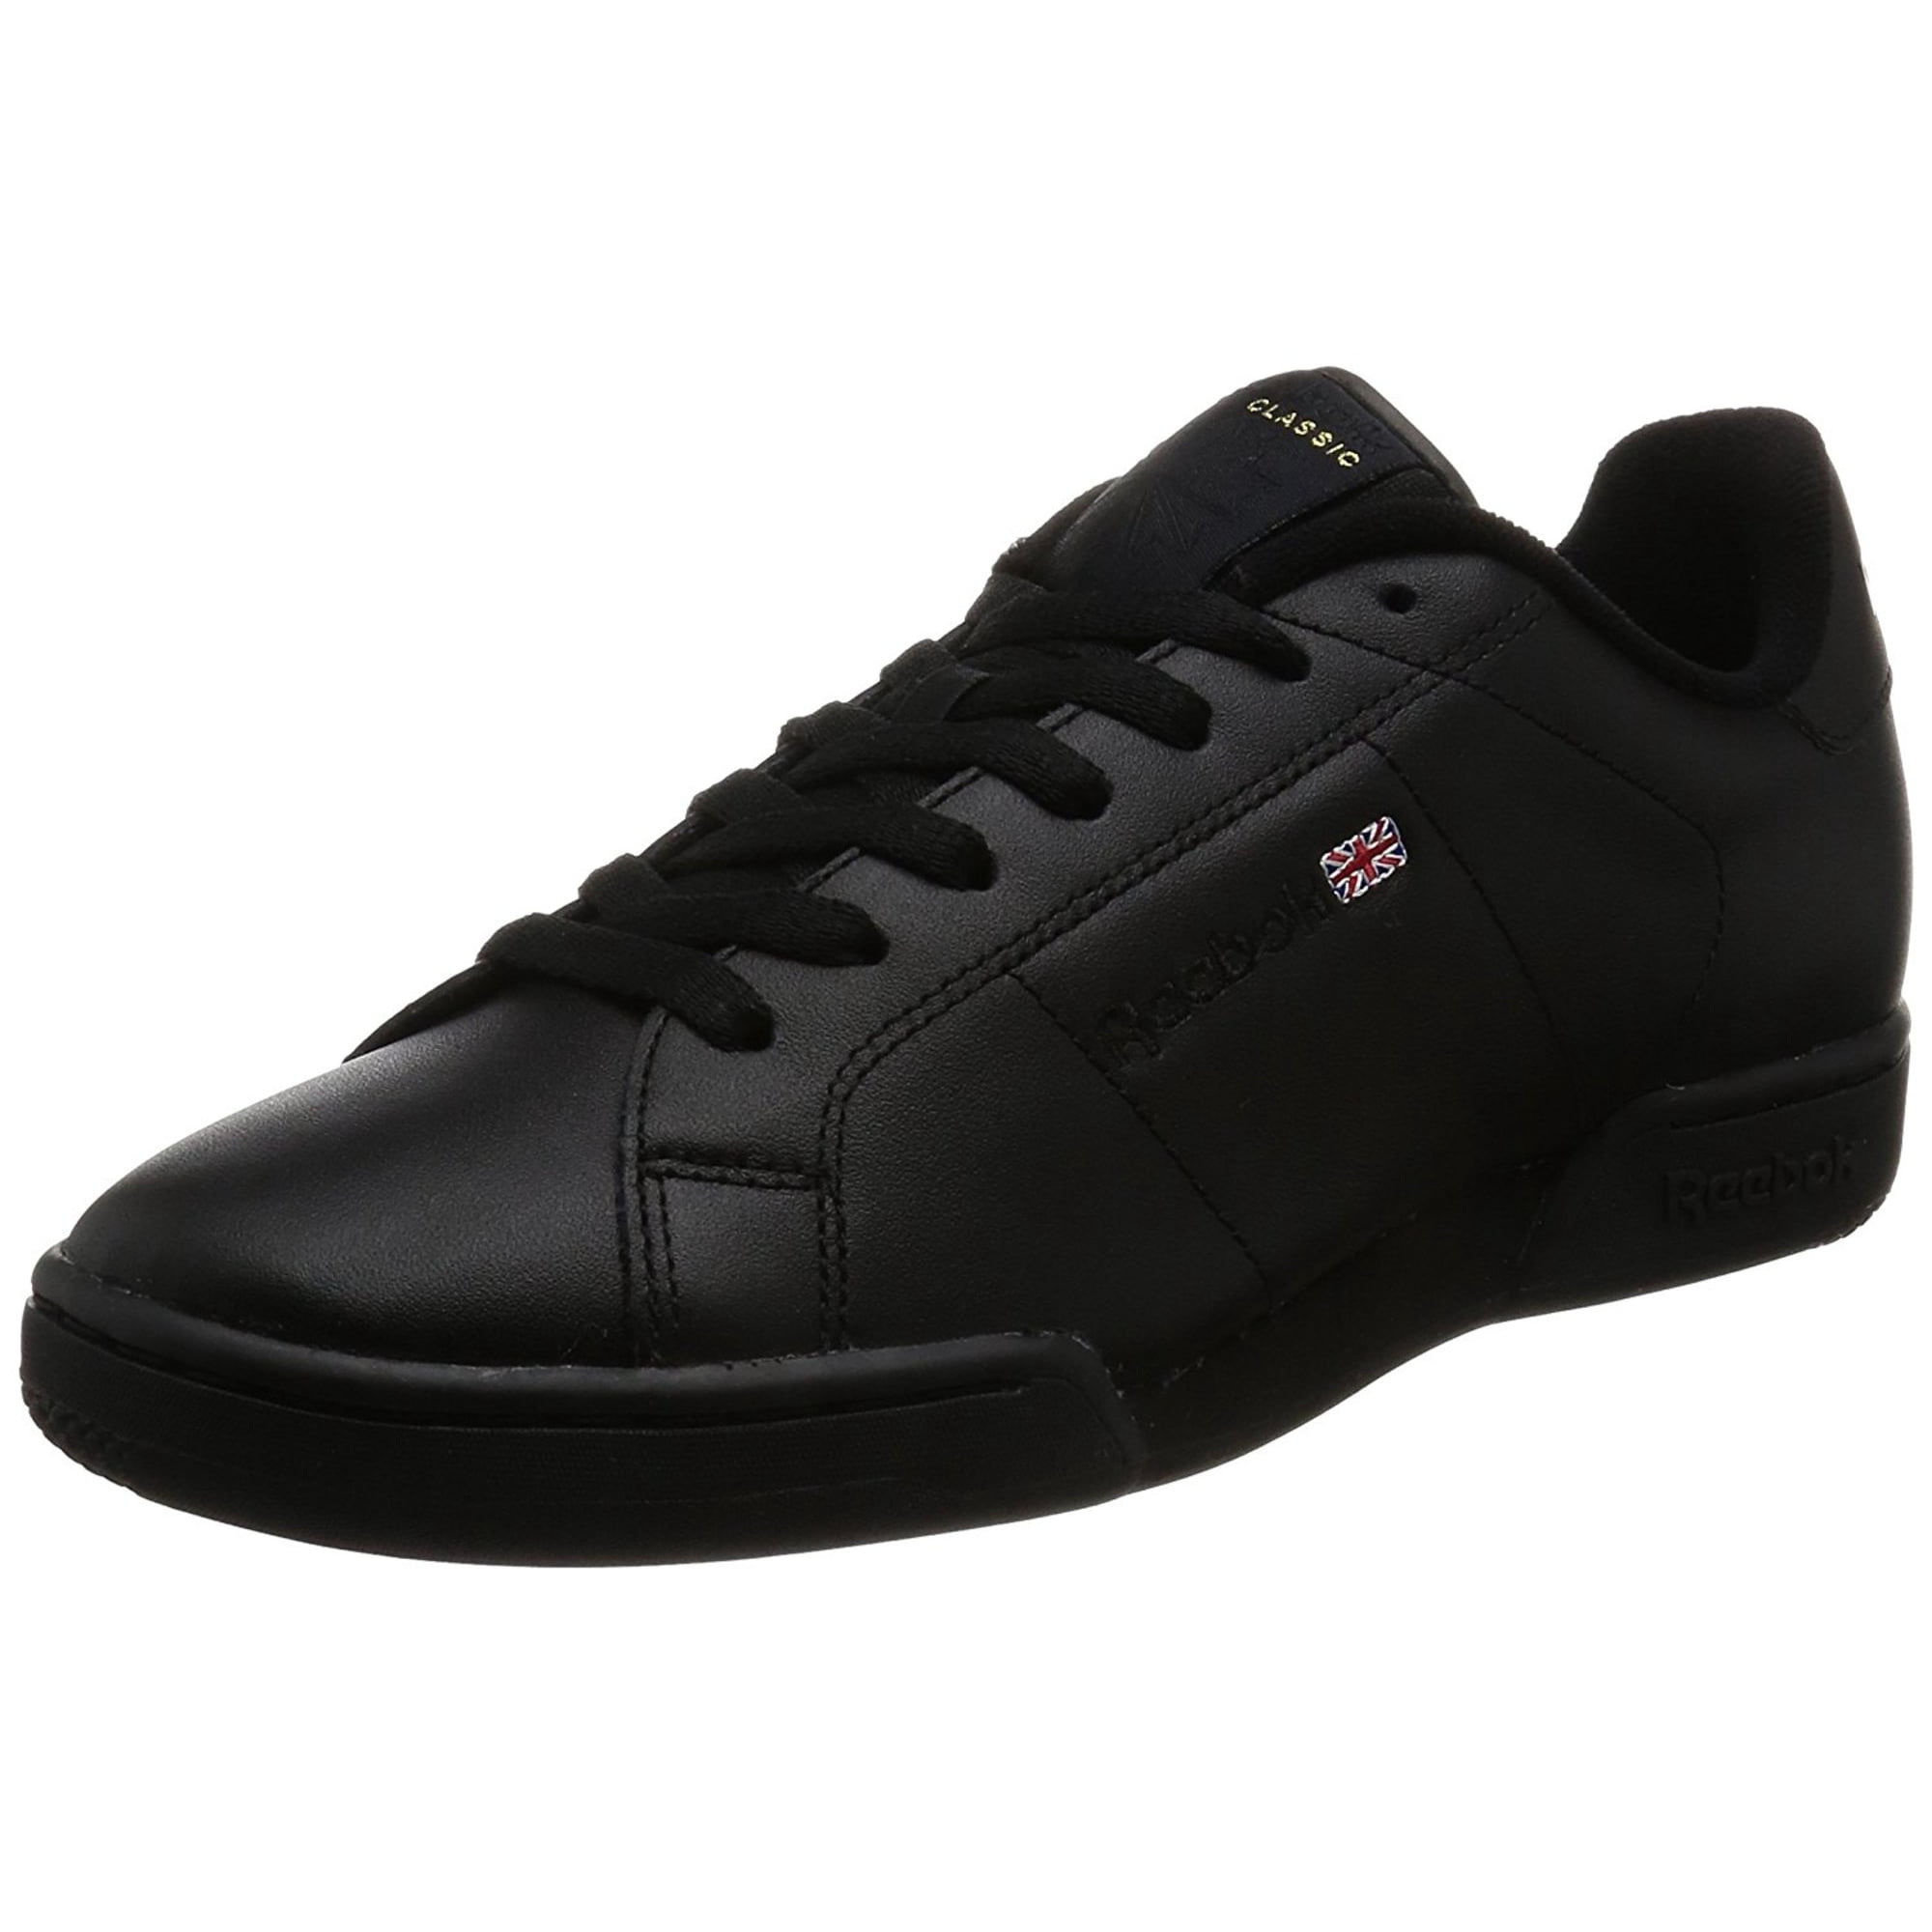 Reebok NPC Classic Sneaker,Black,10 M US | Walmart Canada